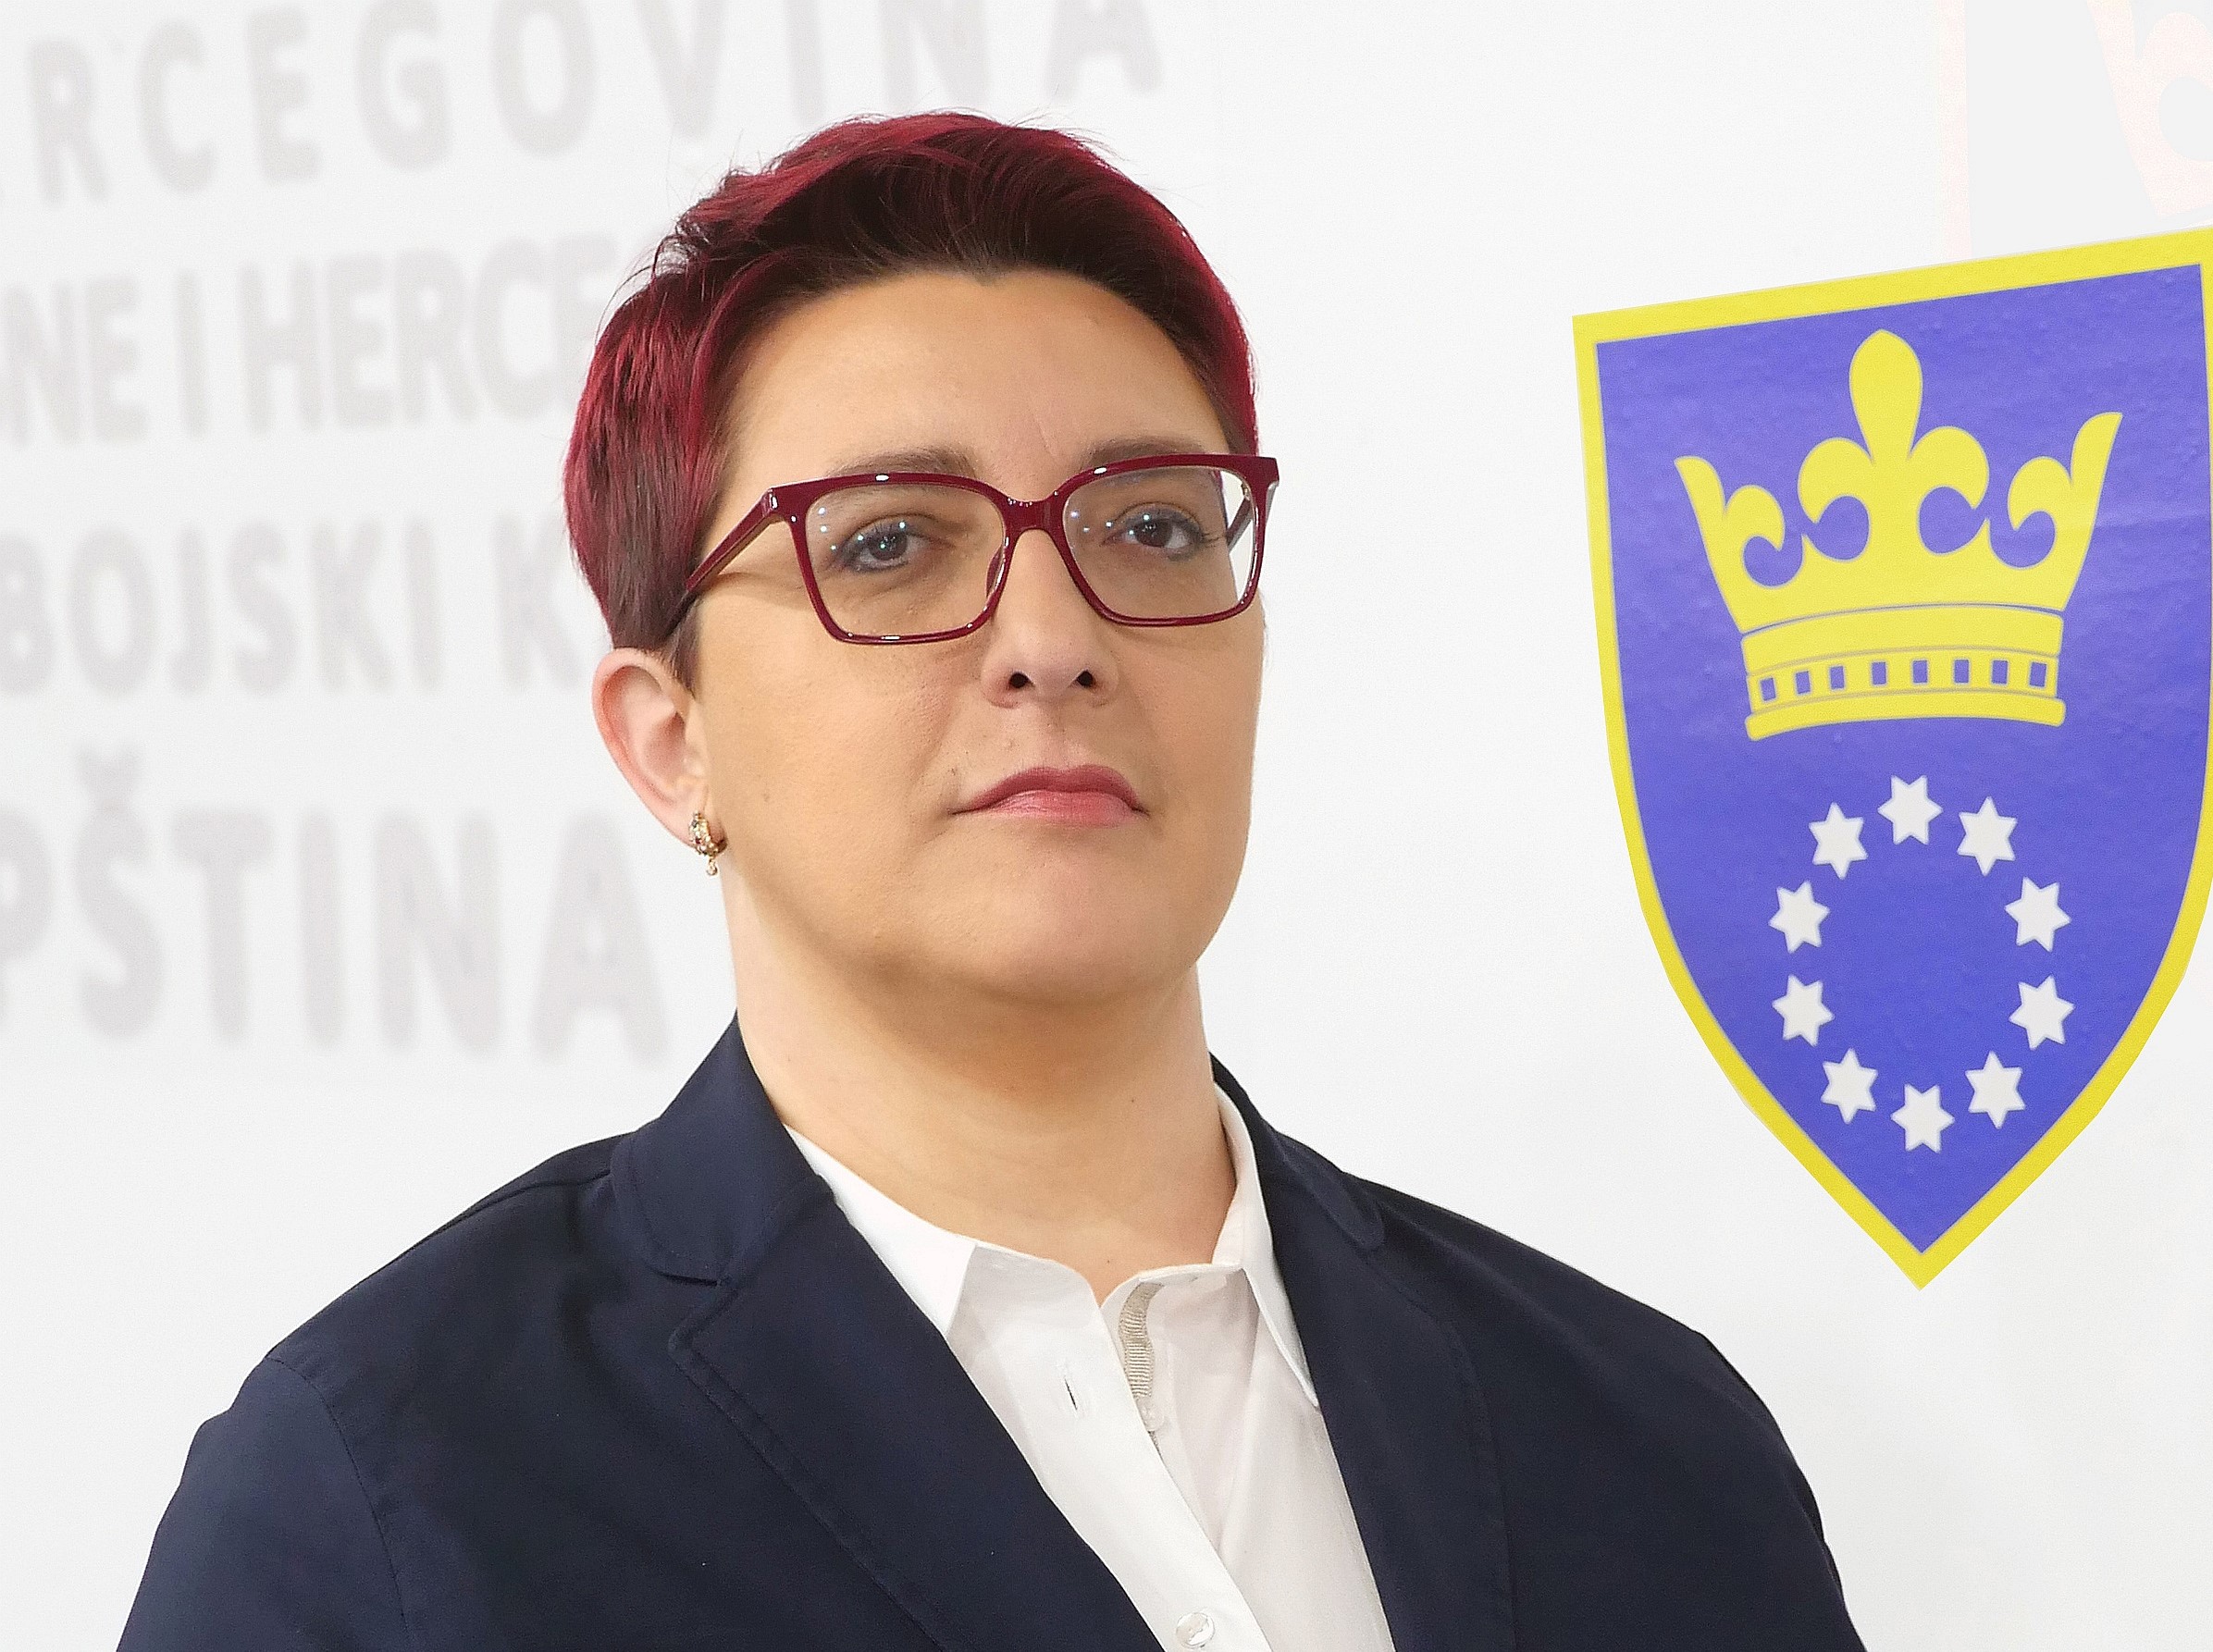 Dženana Čišija, ministrica finansija ZDK: Netačan je navod o navodnoj naredbi uposlenicima Ministarstva finansija ZDK da su obavezni koristiti isključivo bosanski jezik